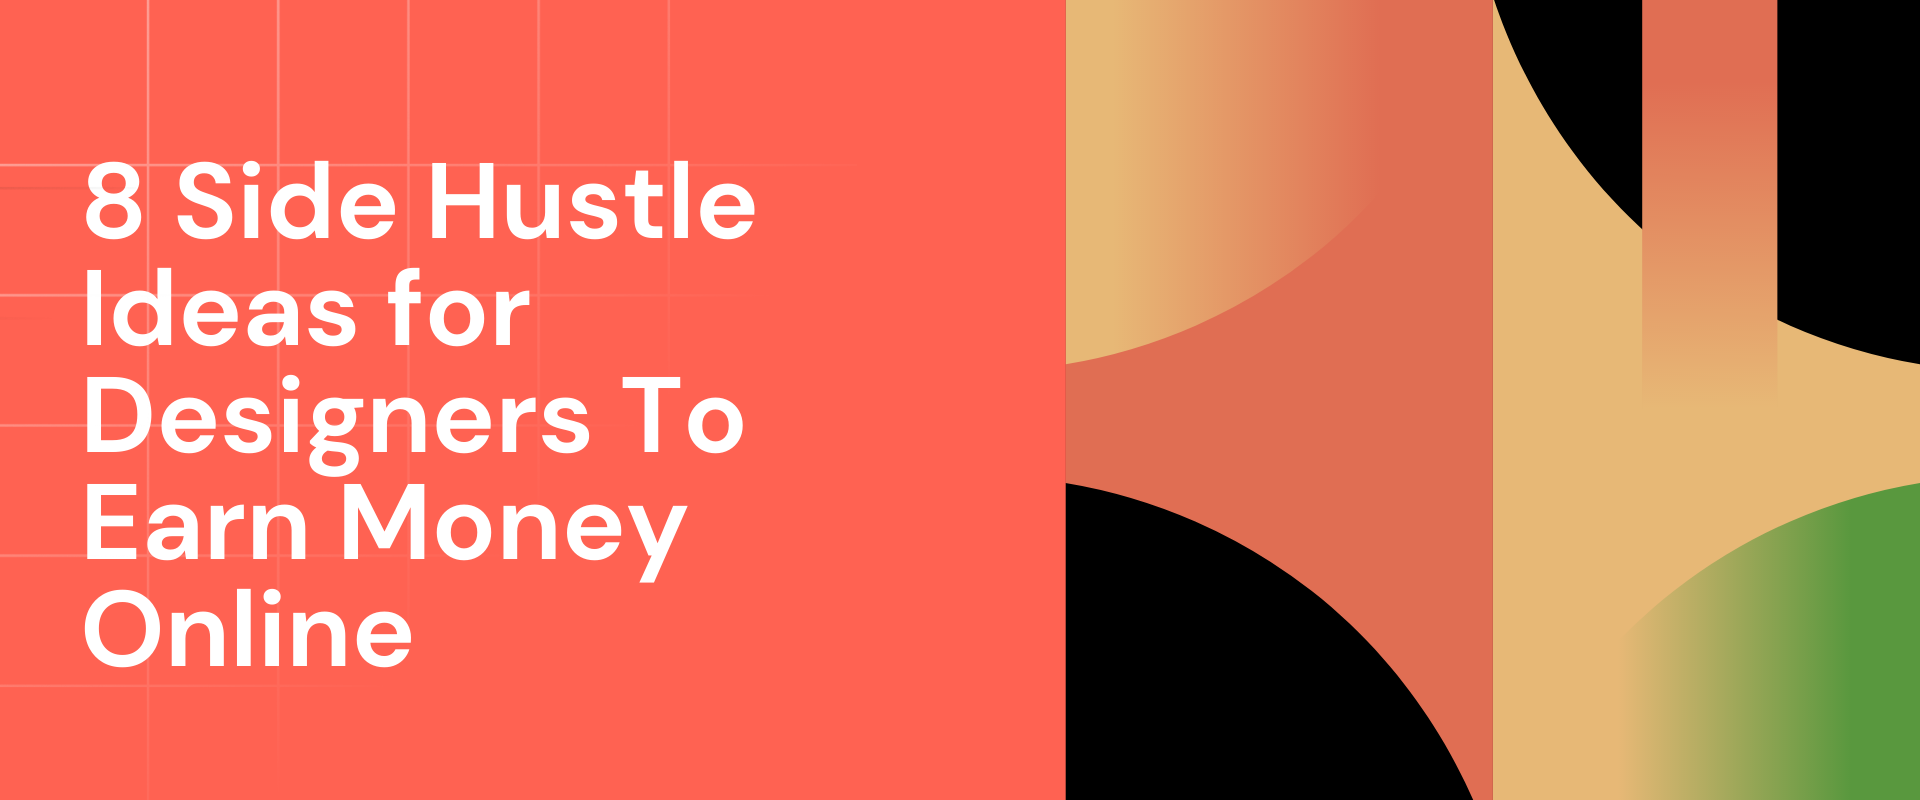 8 Side Hustle Ideas for Designers To Earn Money Online